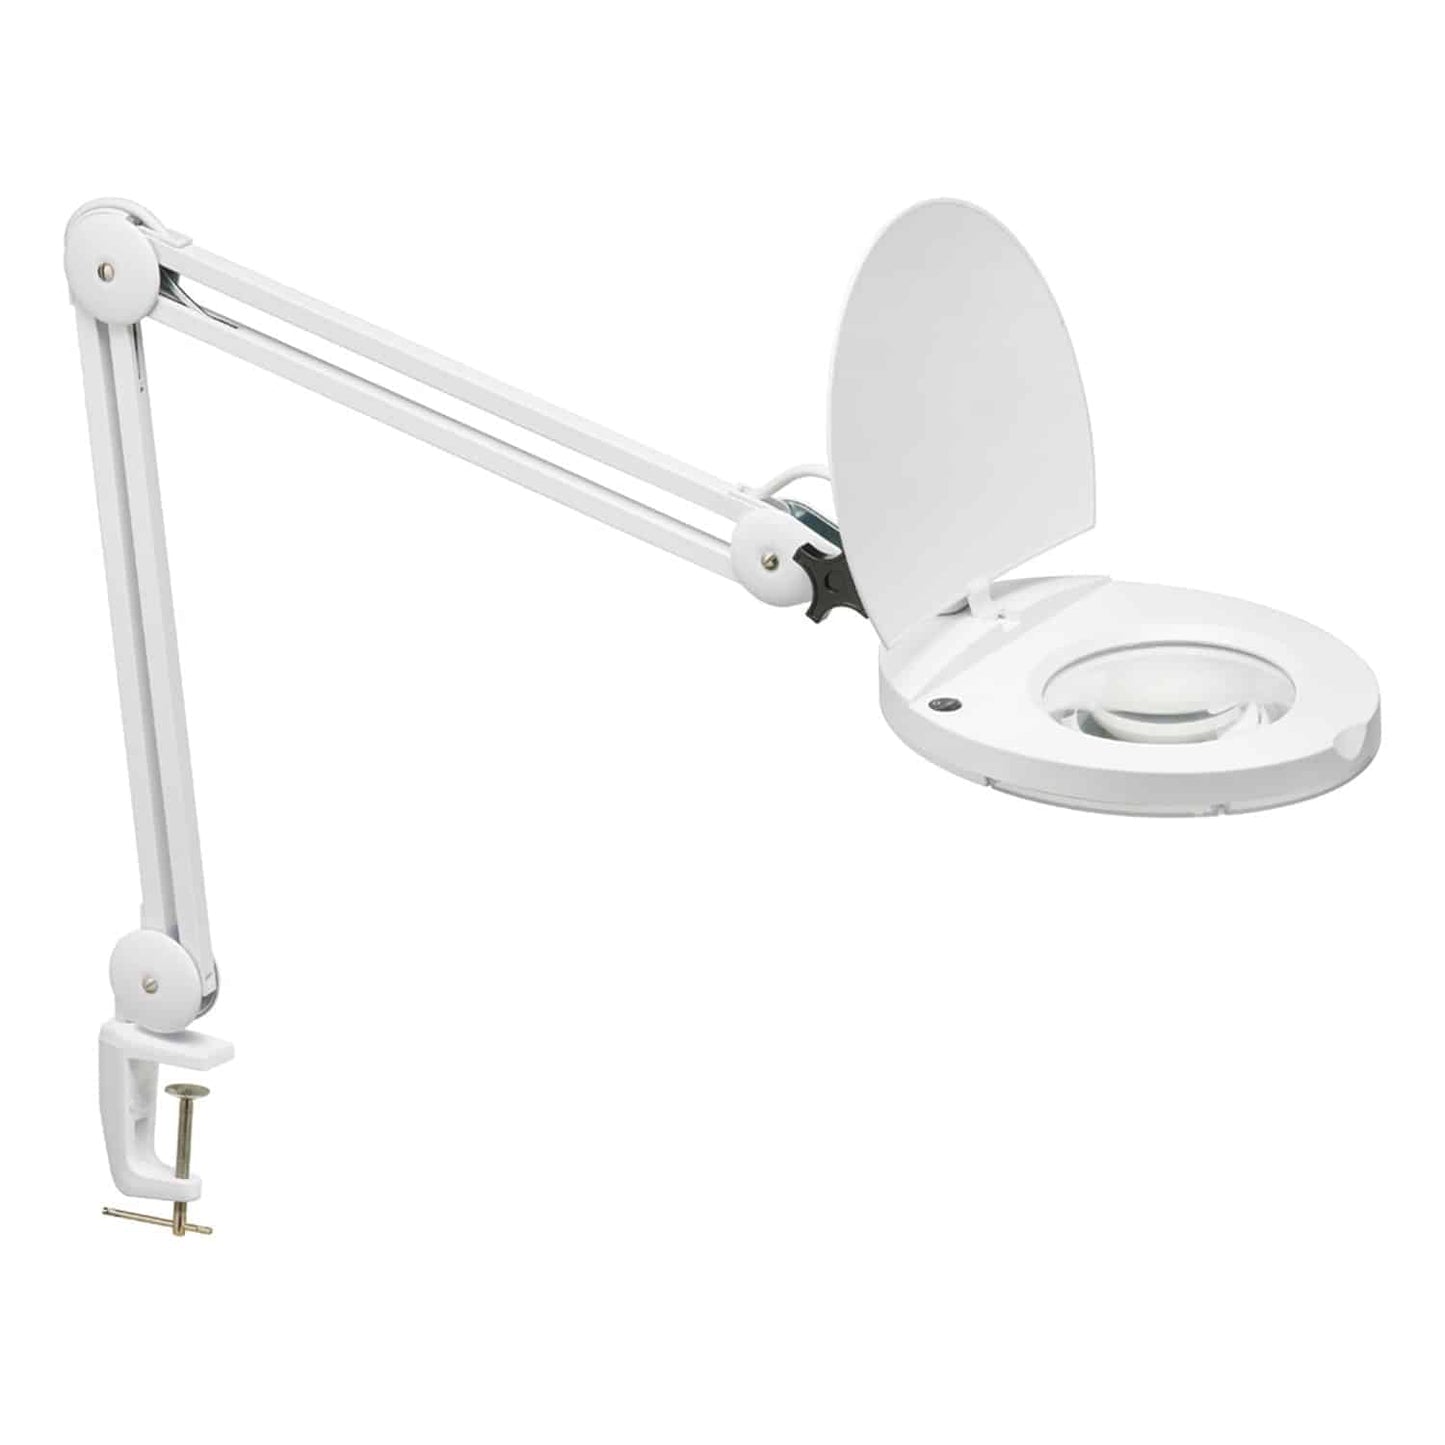 Dainolite DMLED10-A-5D-WH 8W LED Magnifier Lamp, White Finish